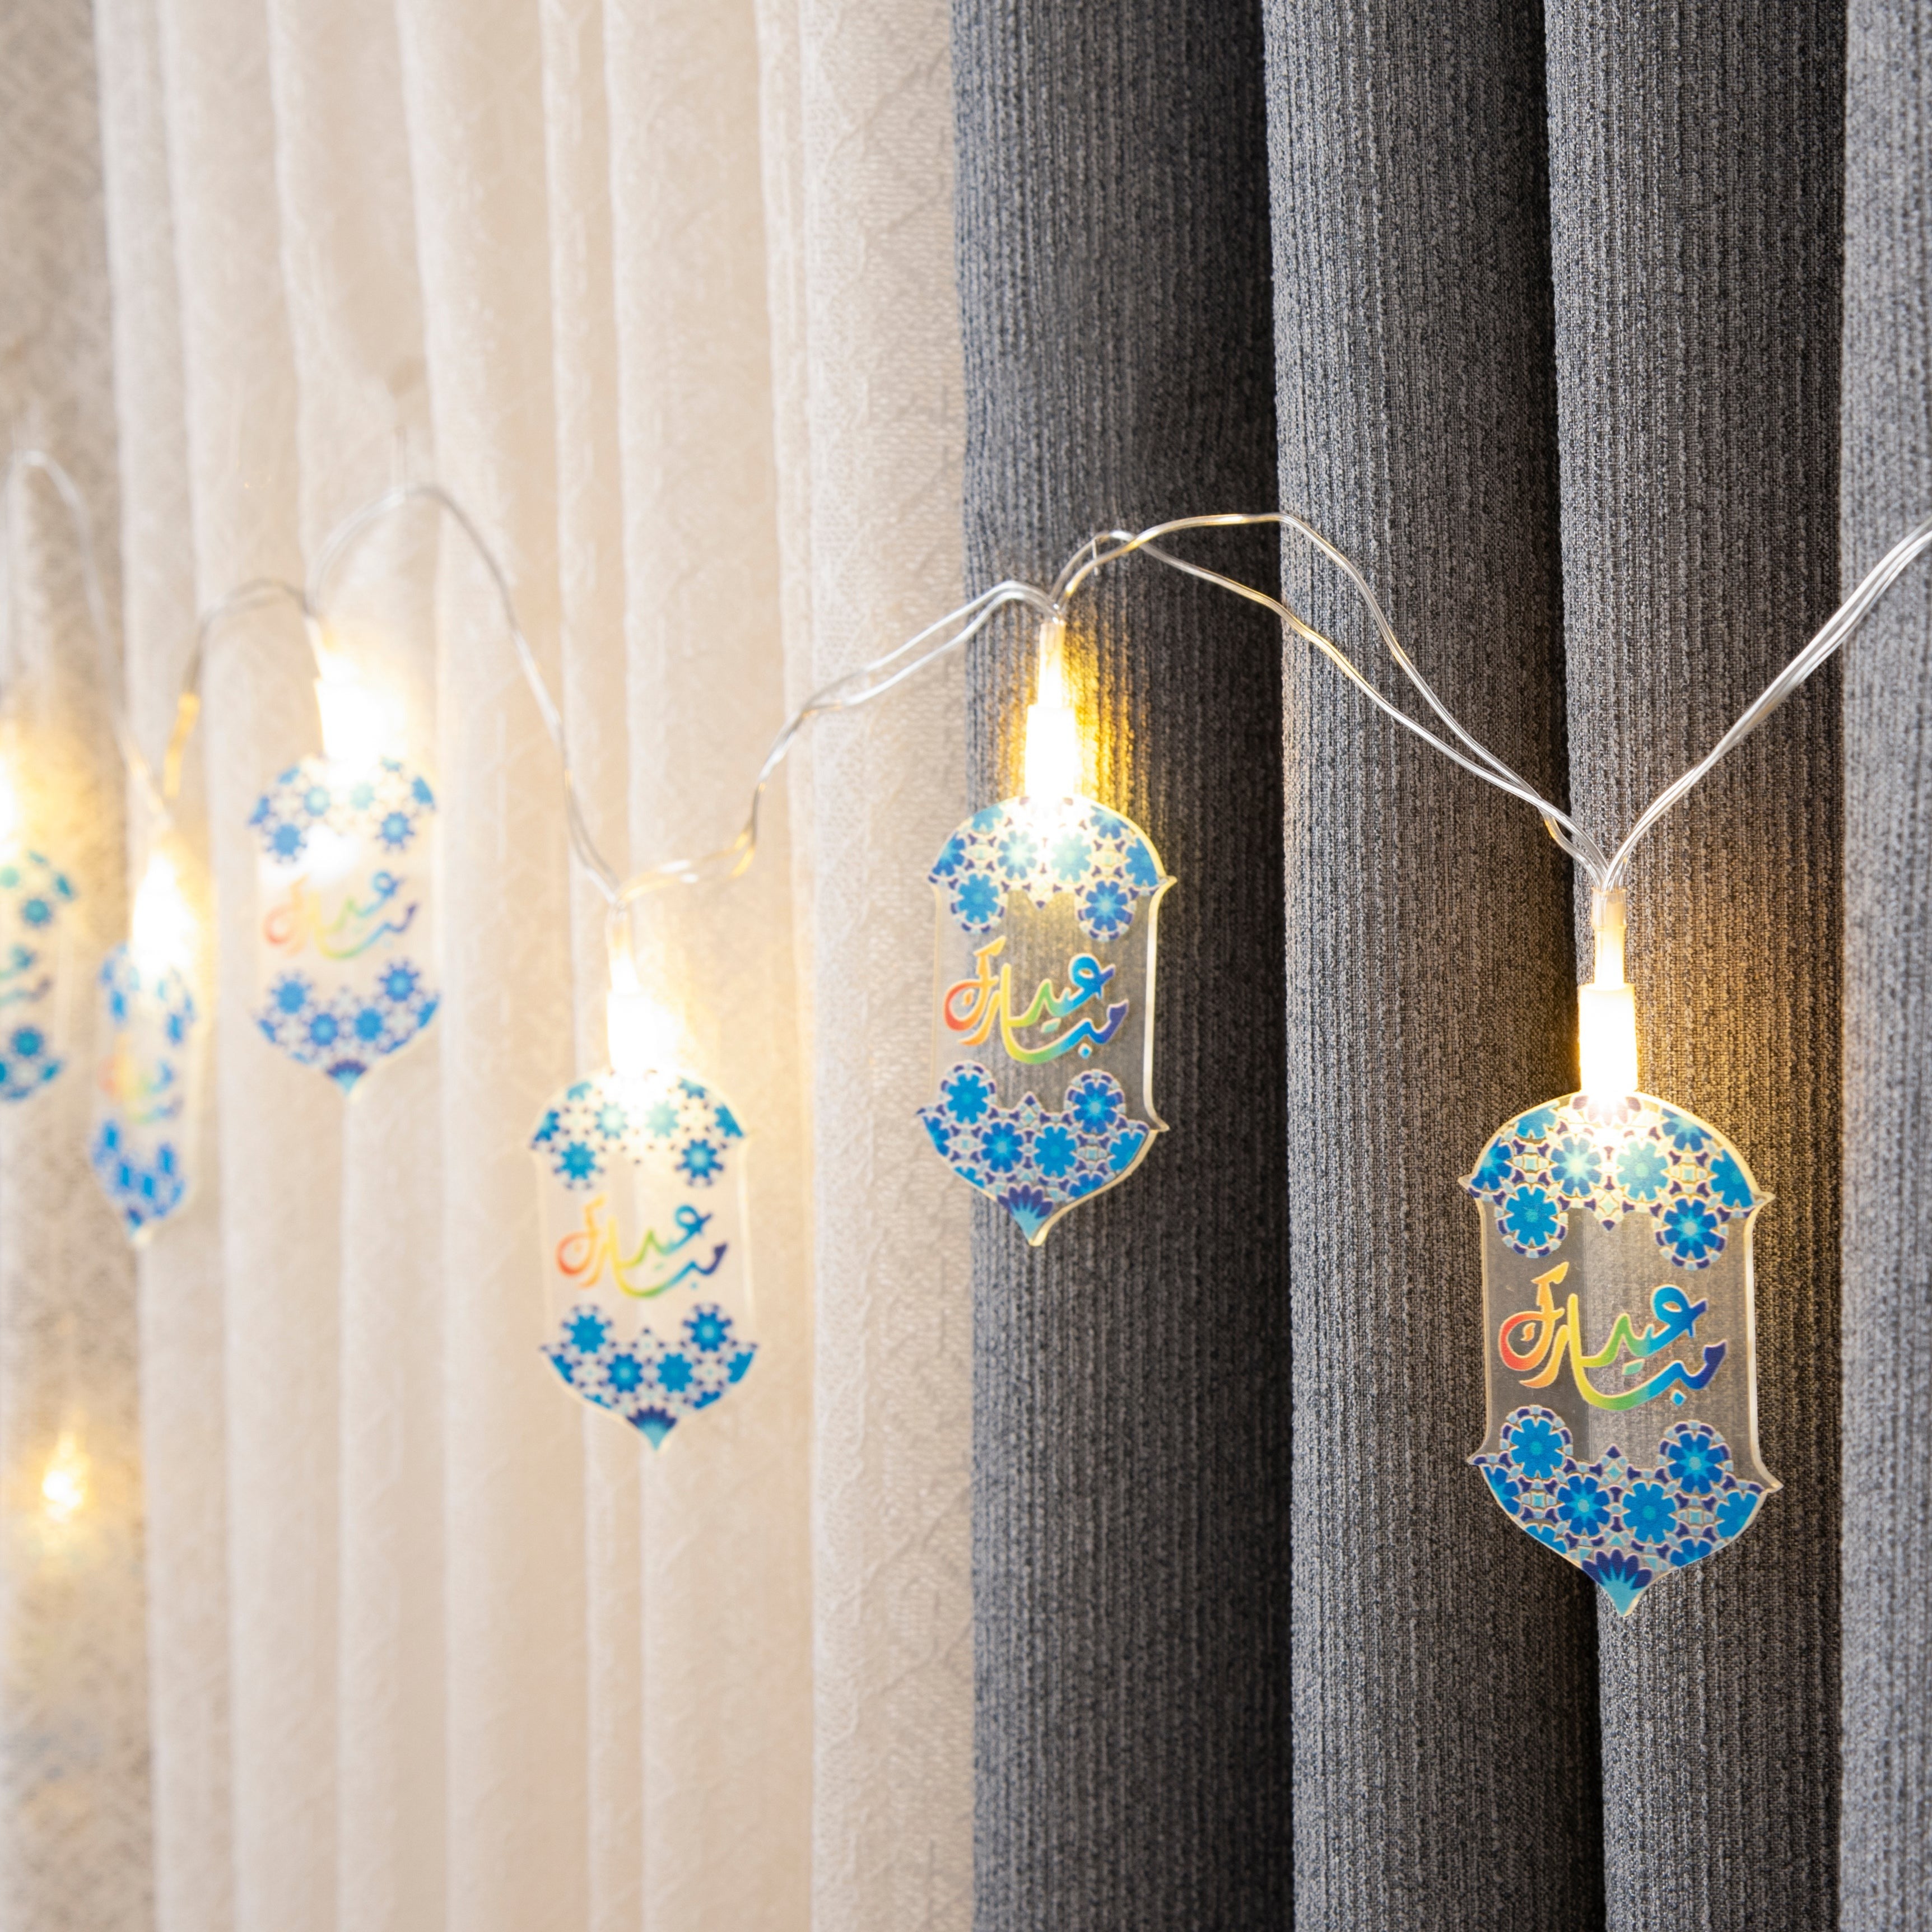 HILALFUL Eid Mubarak LED Light String